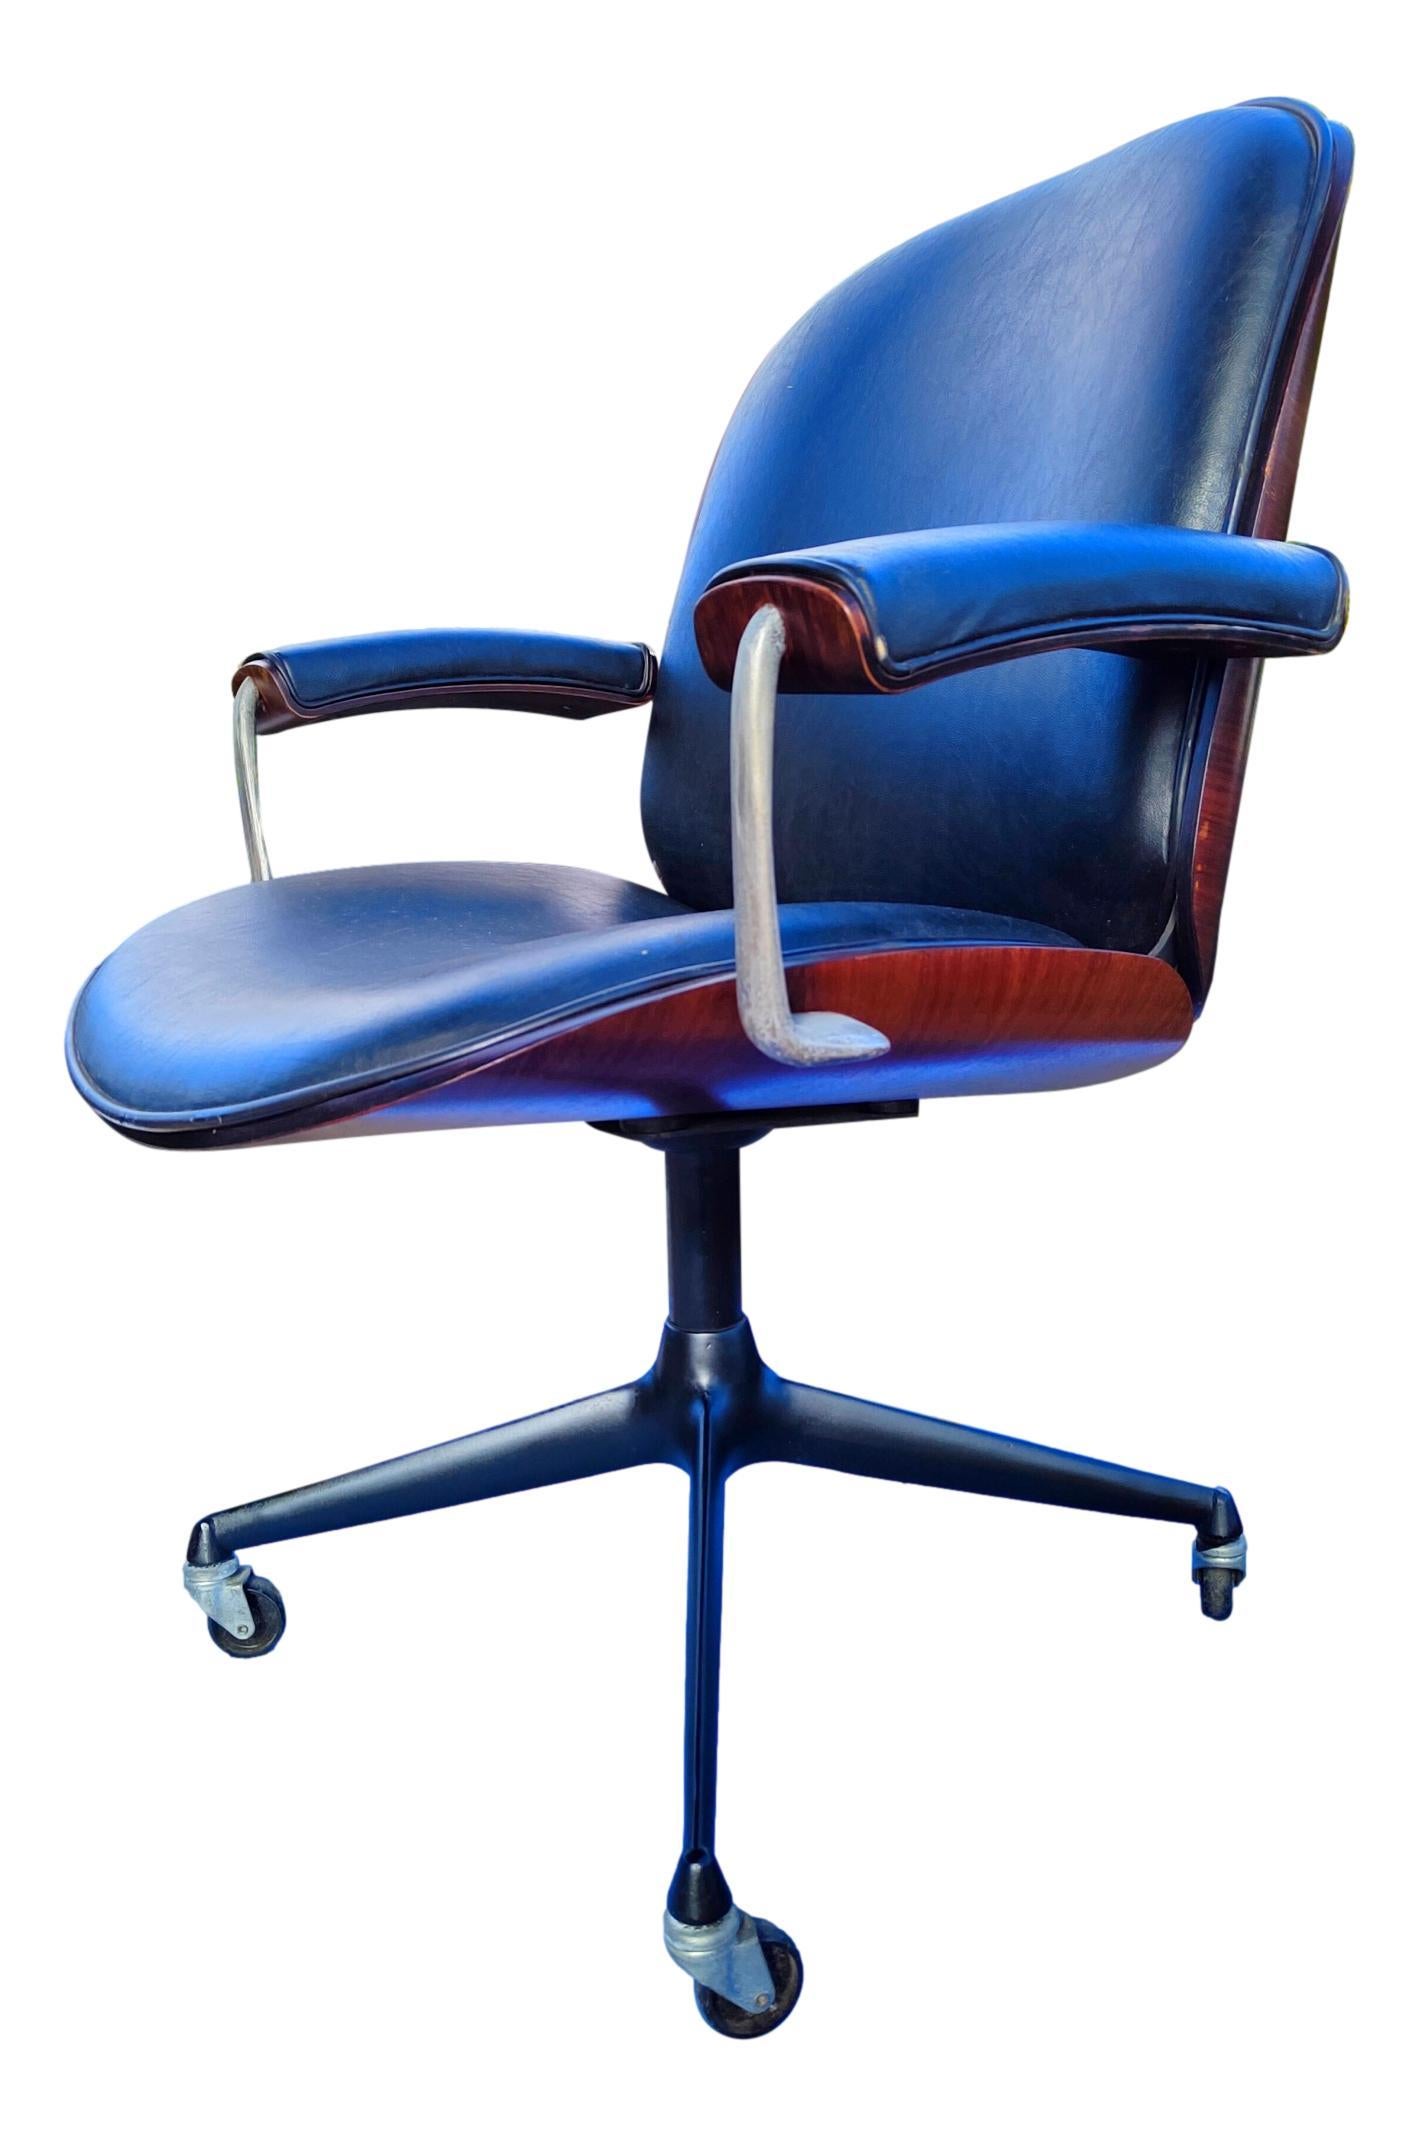 Italian Desk Office Chair Design Ico Parisi for Mim Roma 1960